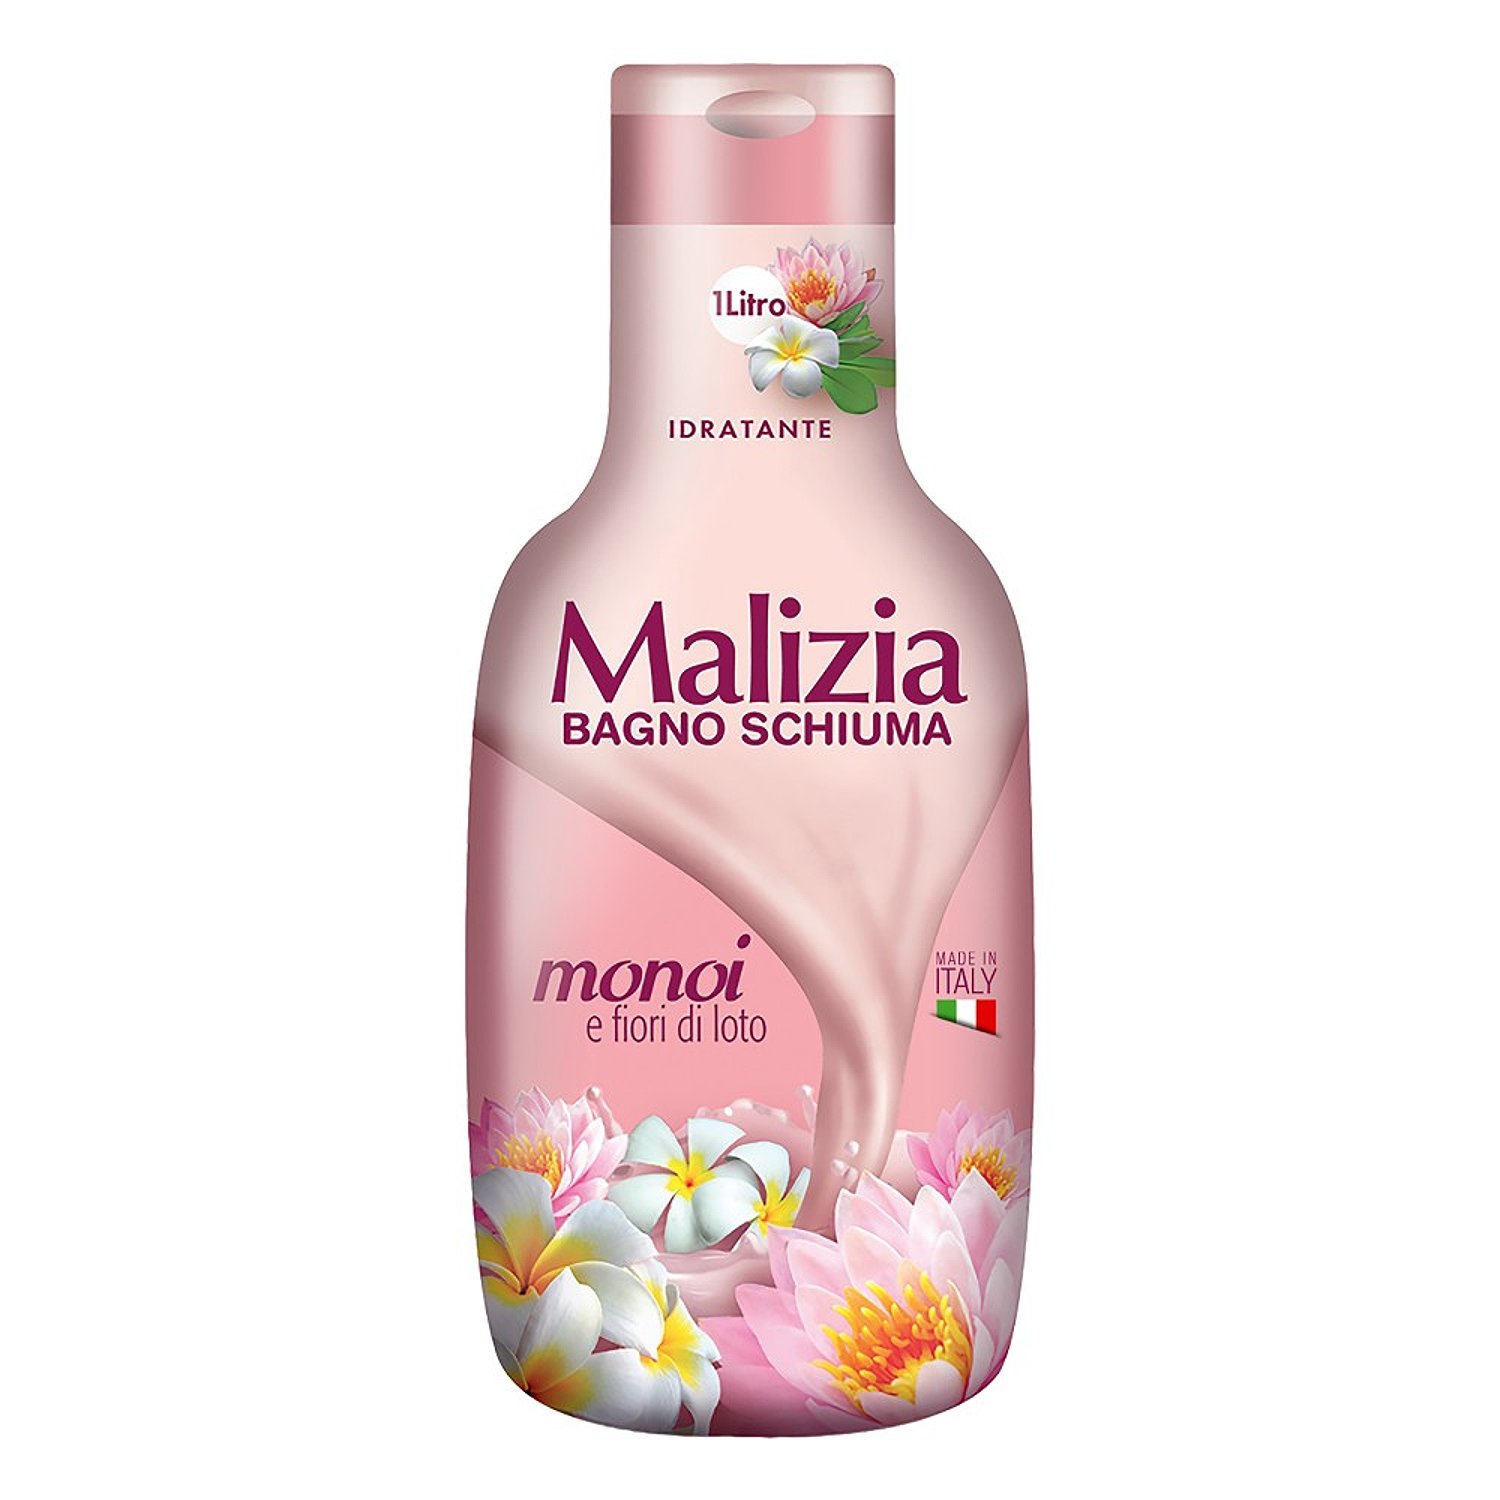 Malizia Пена для ванны Monoi & Lotus flowers 1000 мл - MALIZIA